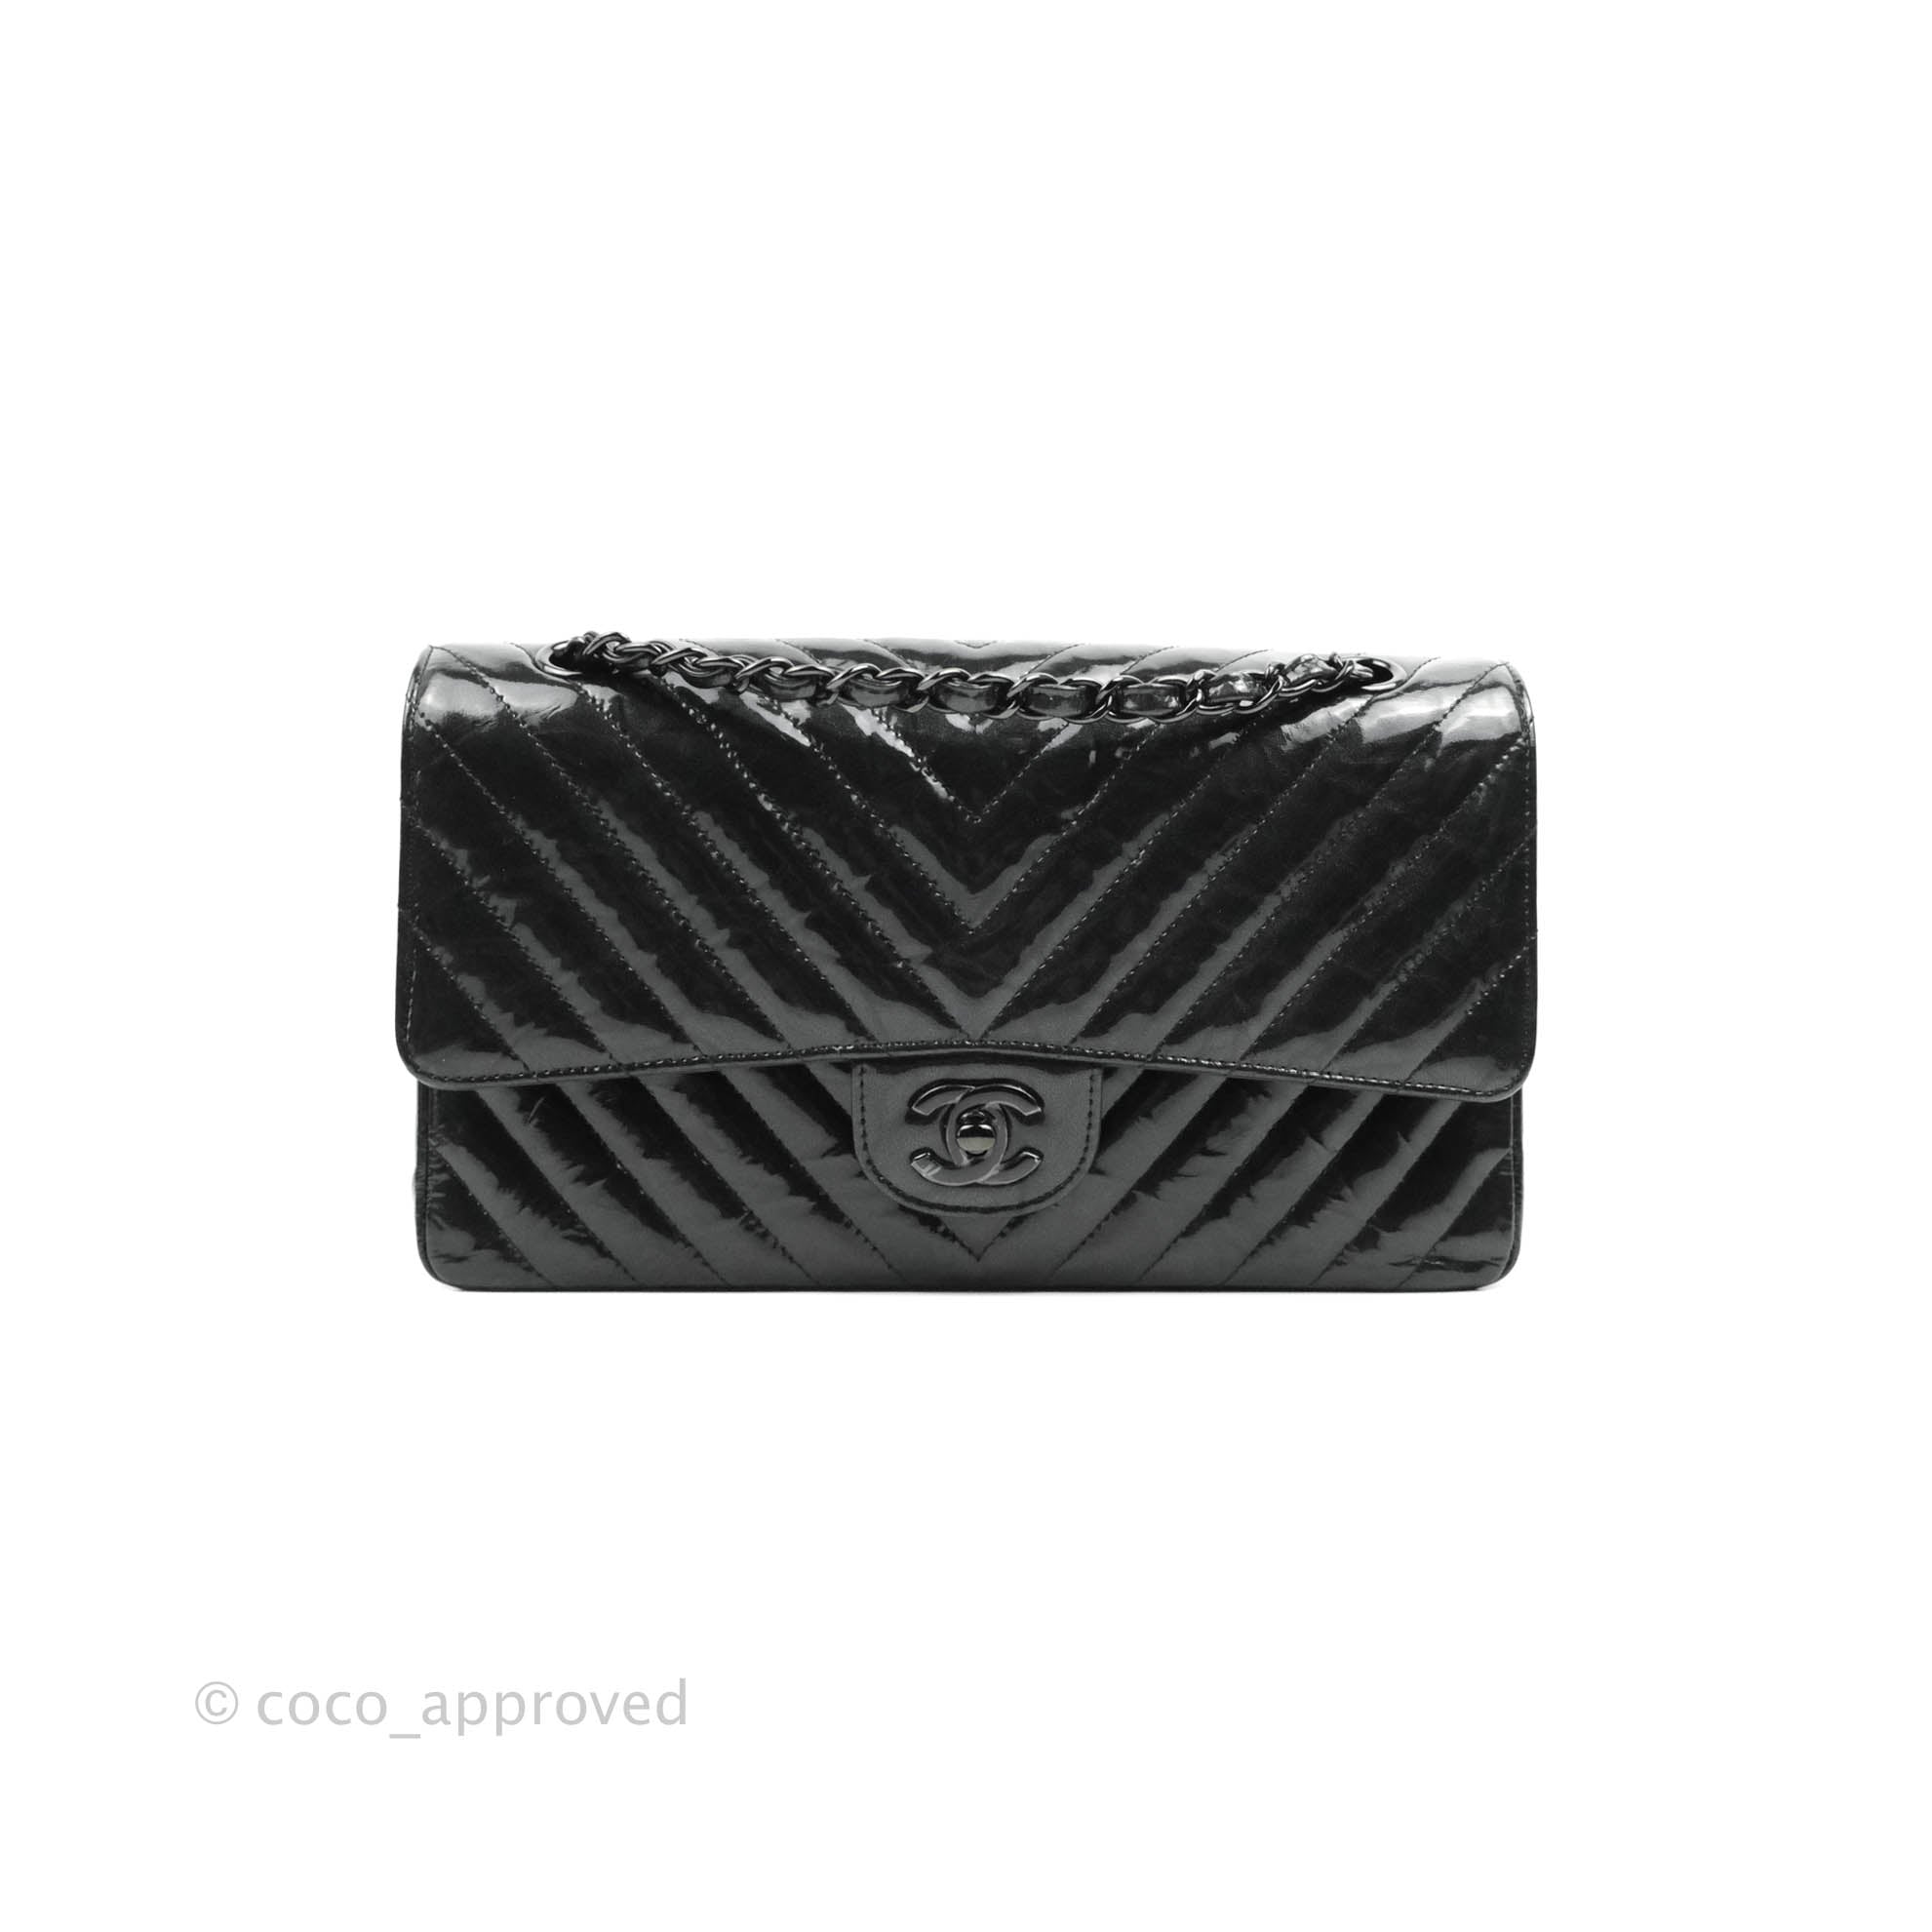 2019 Chanel Black Quilted Crumpled Metallic Calfskin SO Black Mini Flap Bag